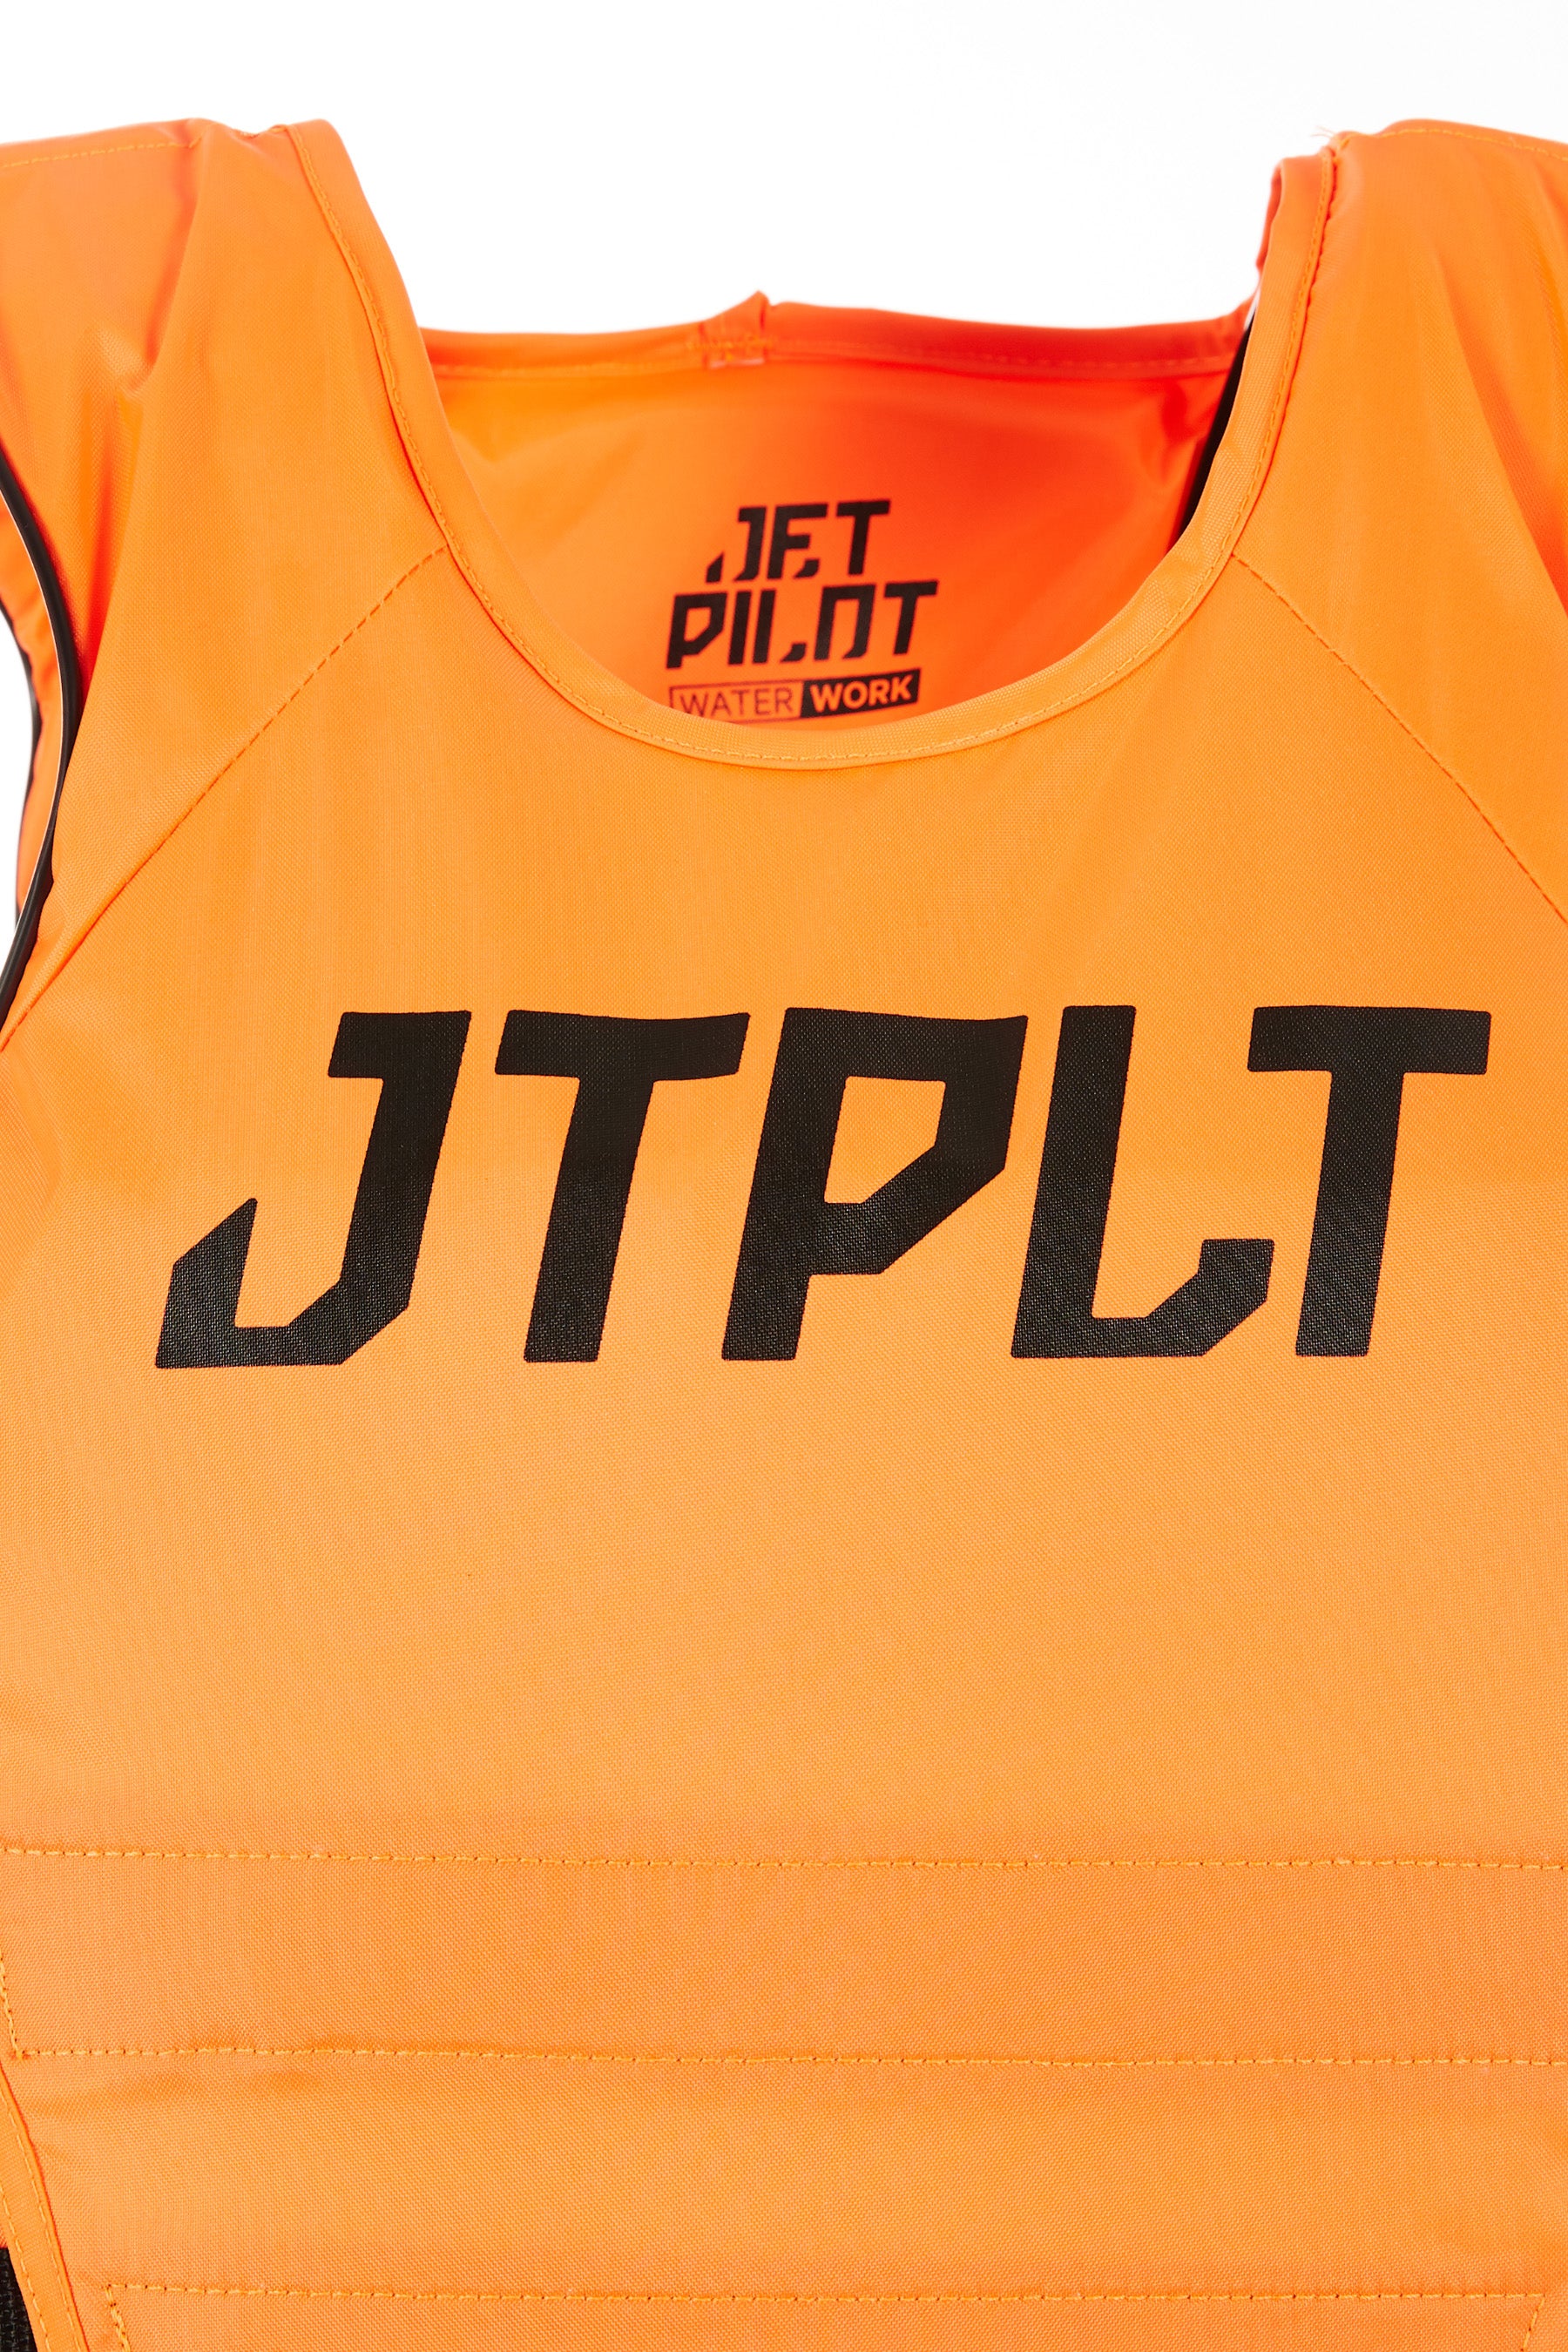 Jetpilot Rx Vault Mens Nylon Life Jacket - Orange 4